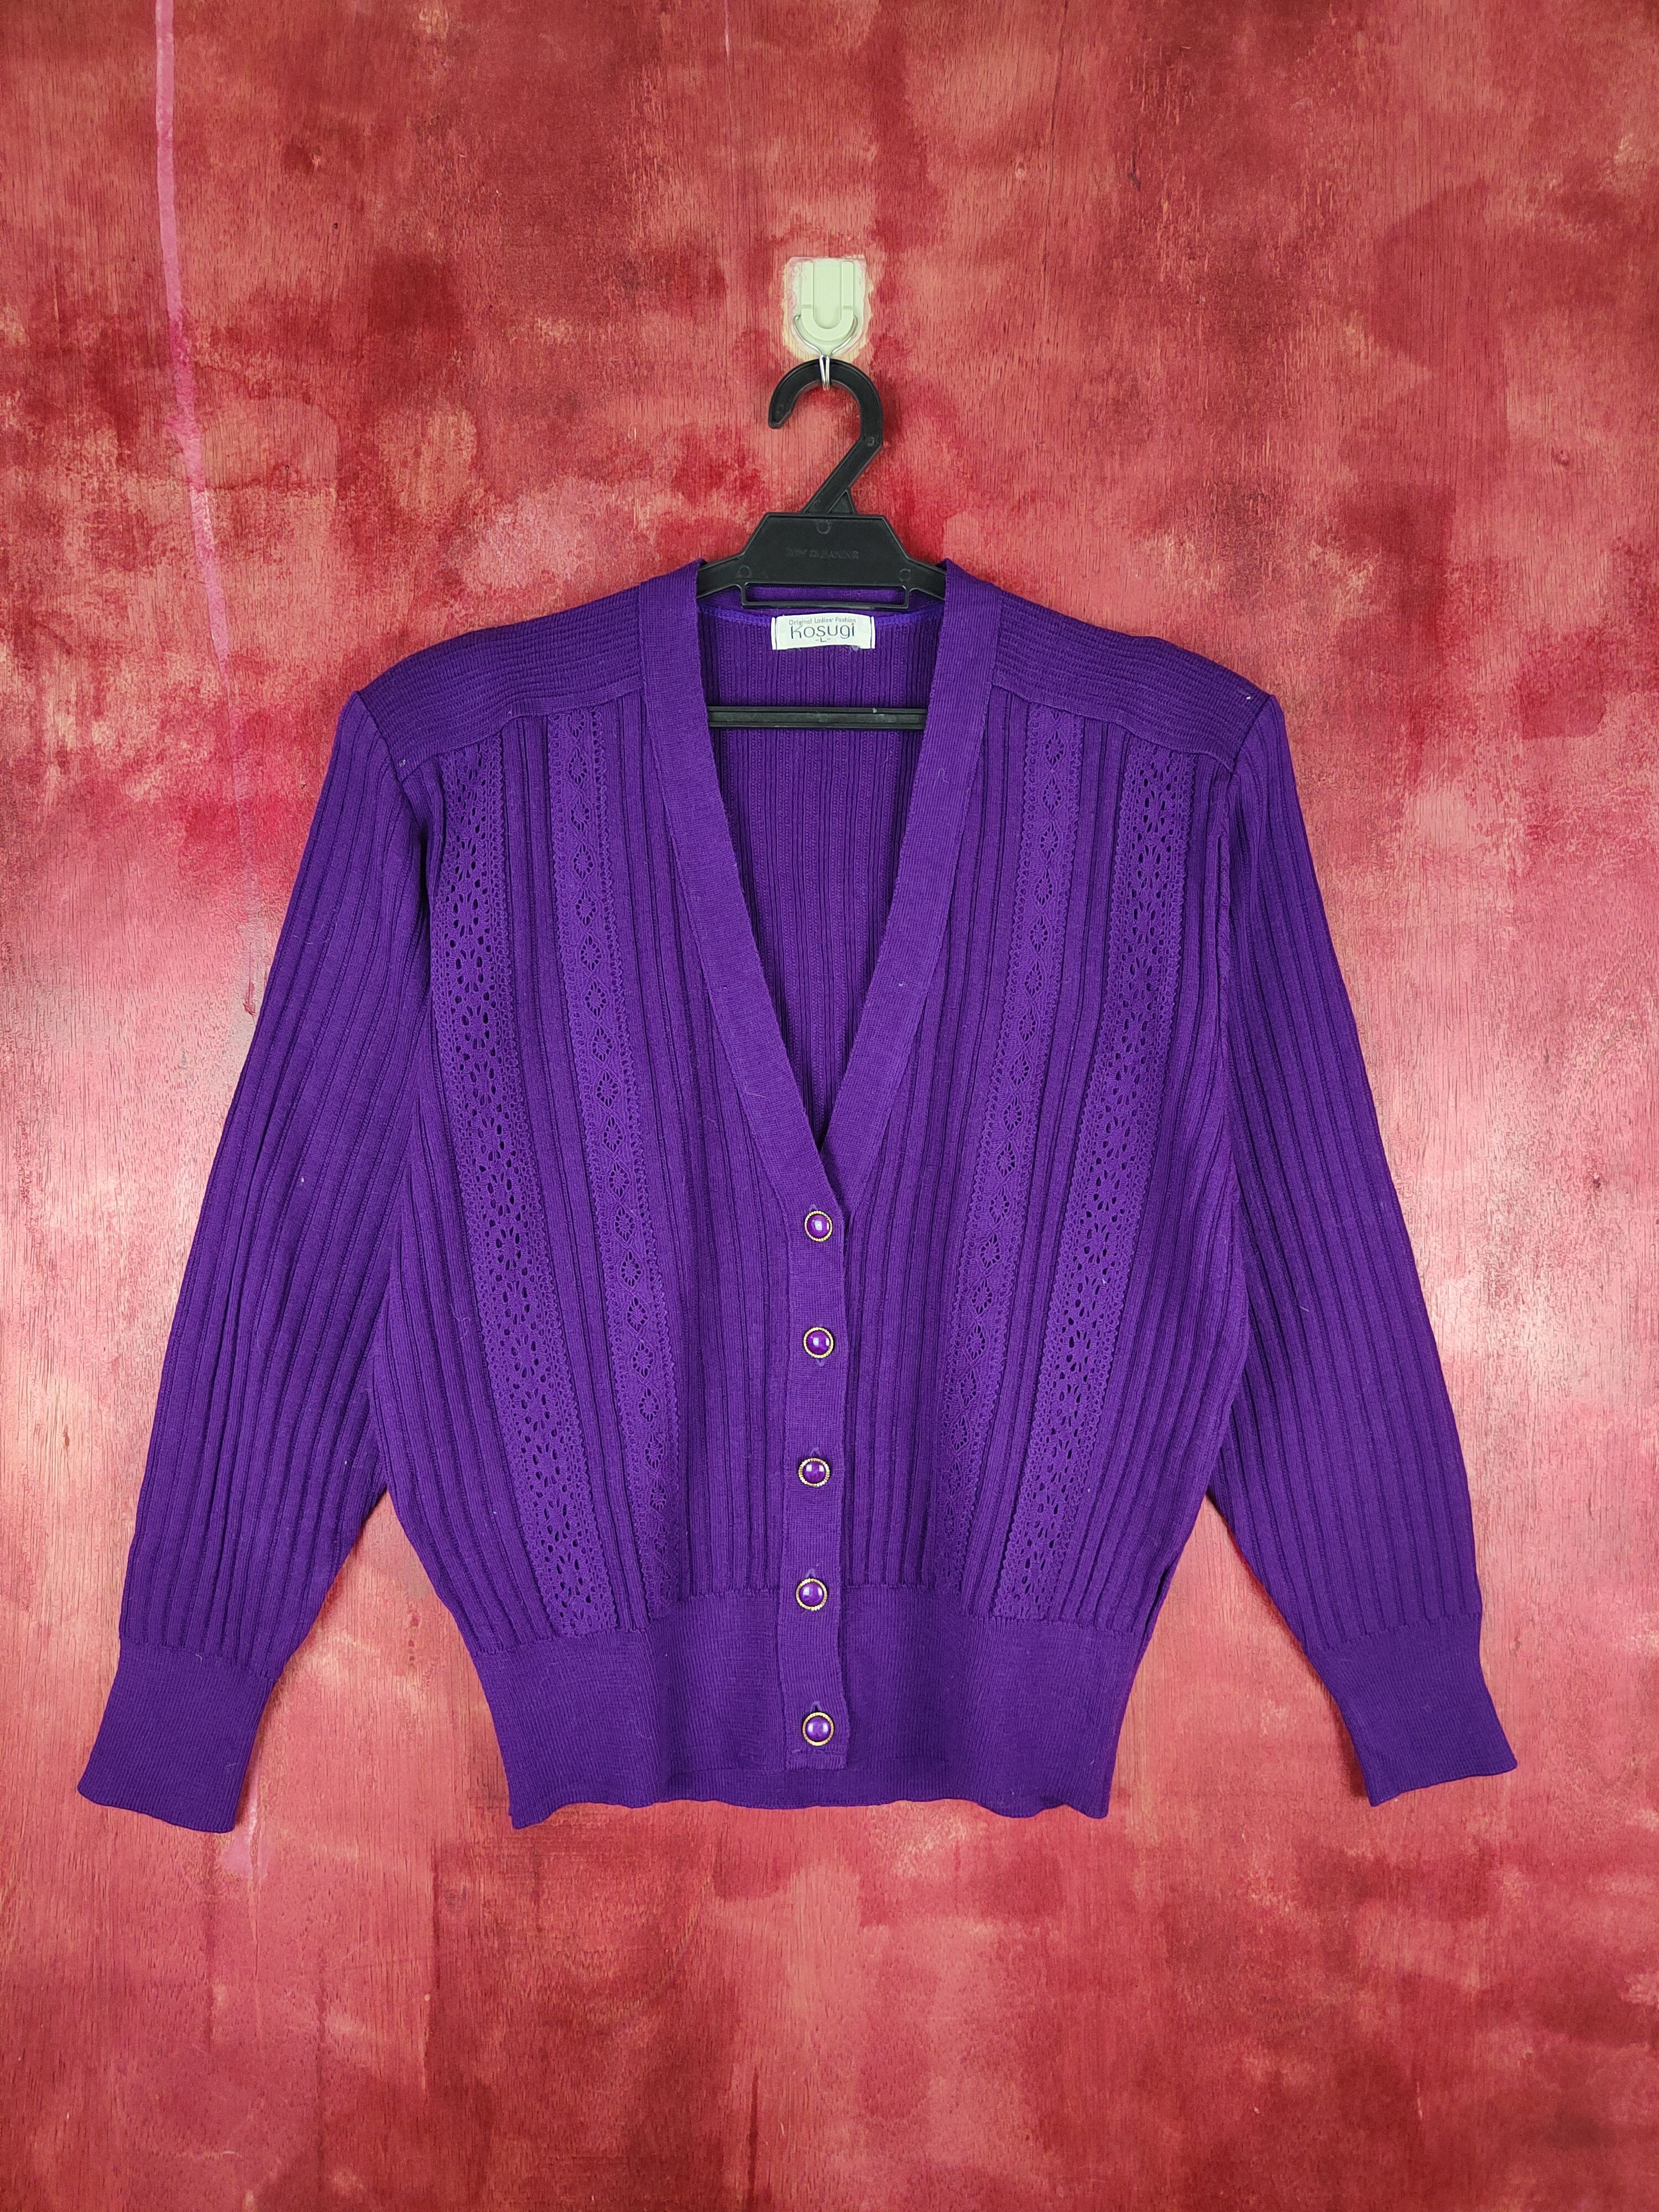 Japanese Brand Kosugi Purple Knitwear Cardigan Crop Tops Size L / US 10 / IT 46 - 1 Preview